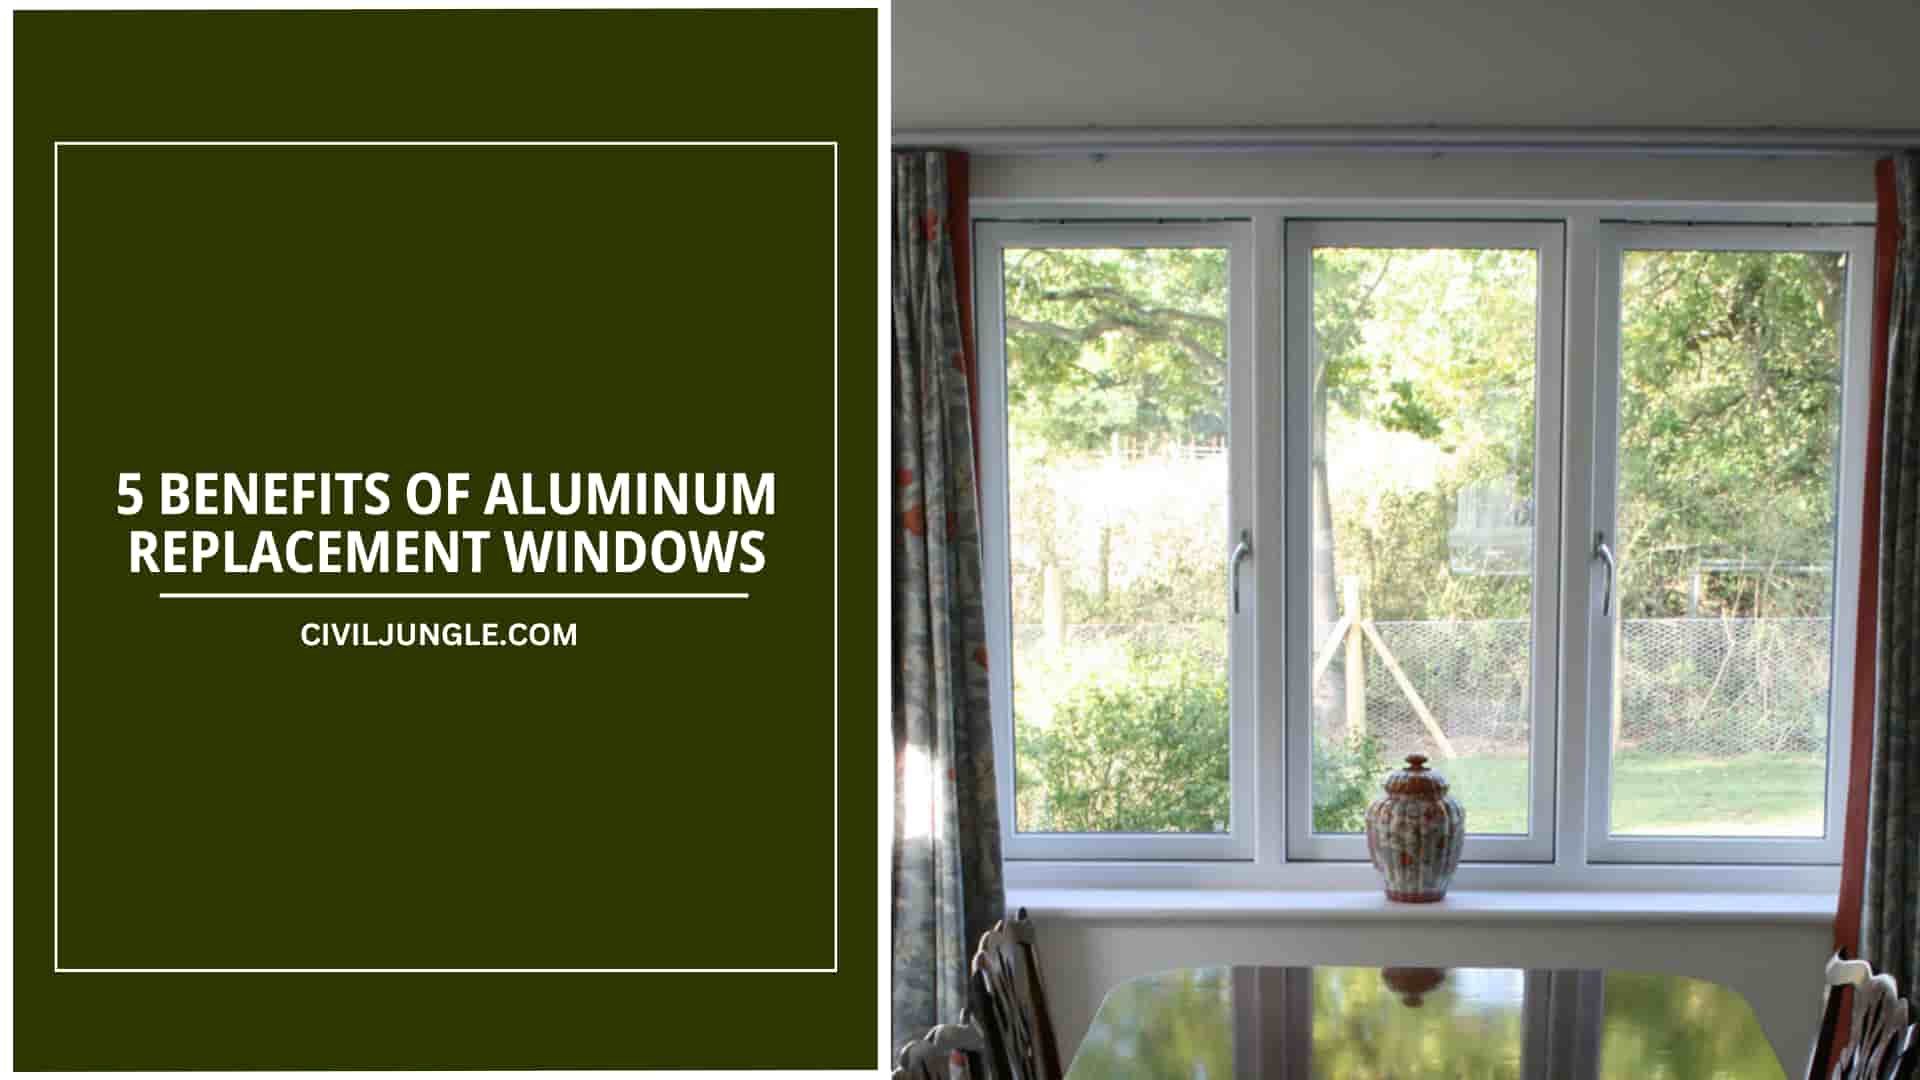 5 Benefits of Aluminum Replacement Windows